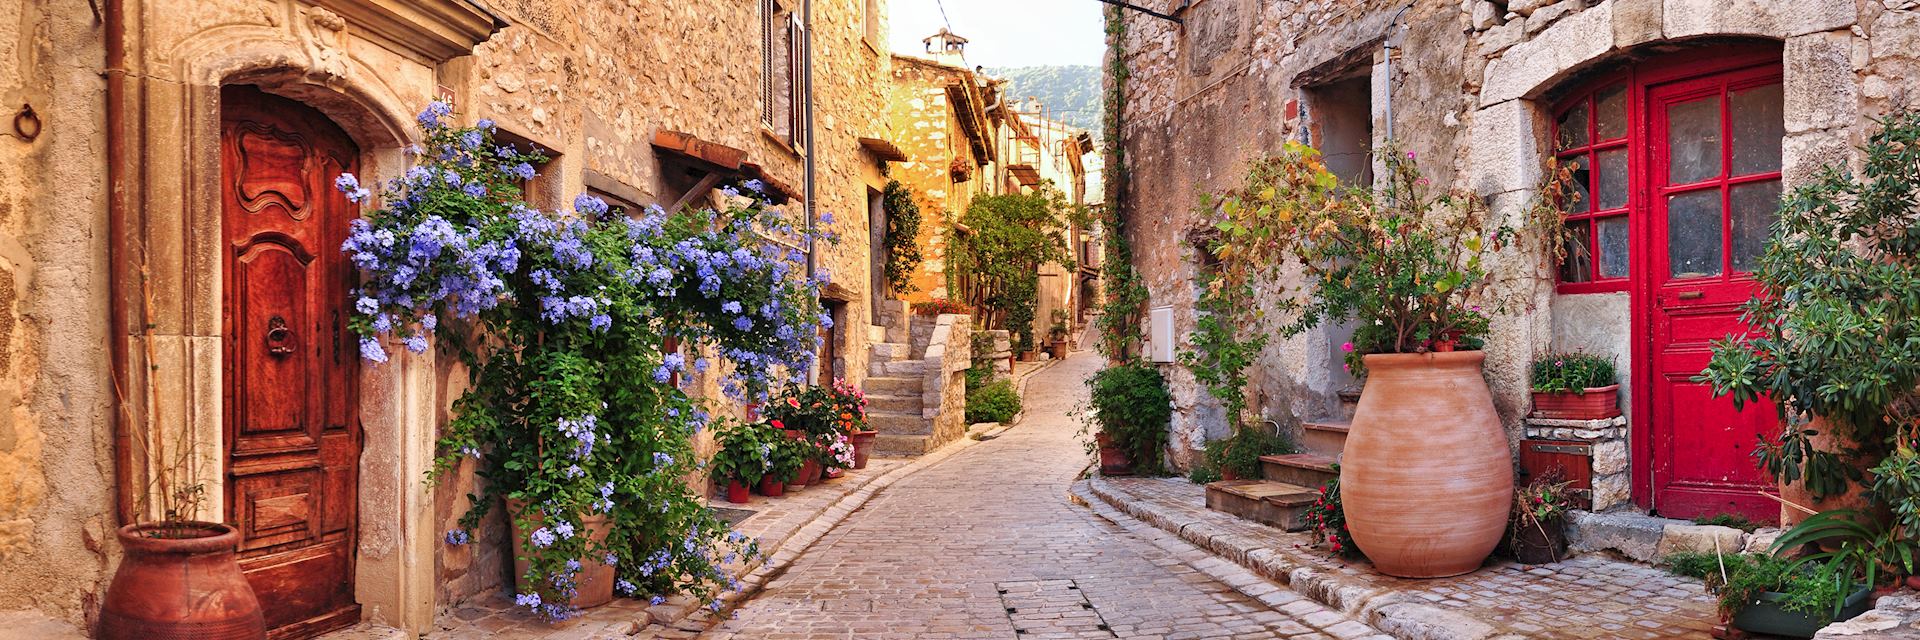 Provençal village street